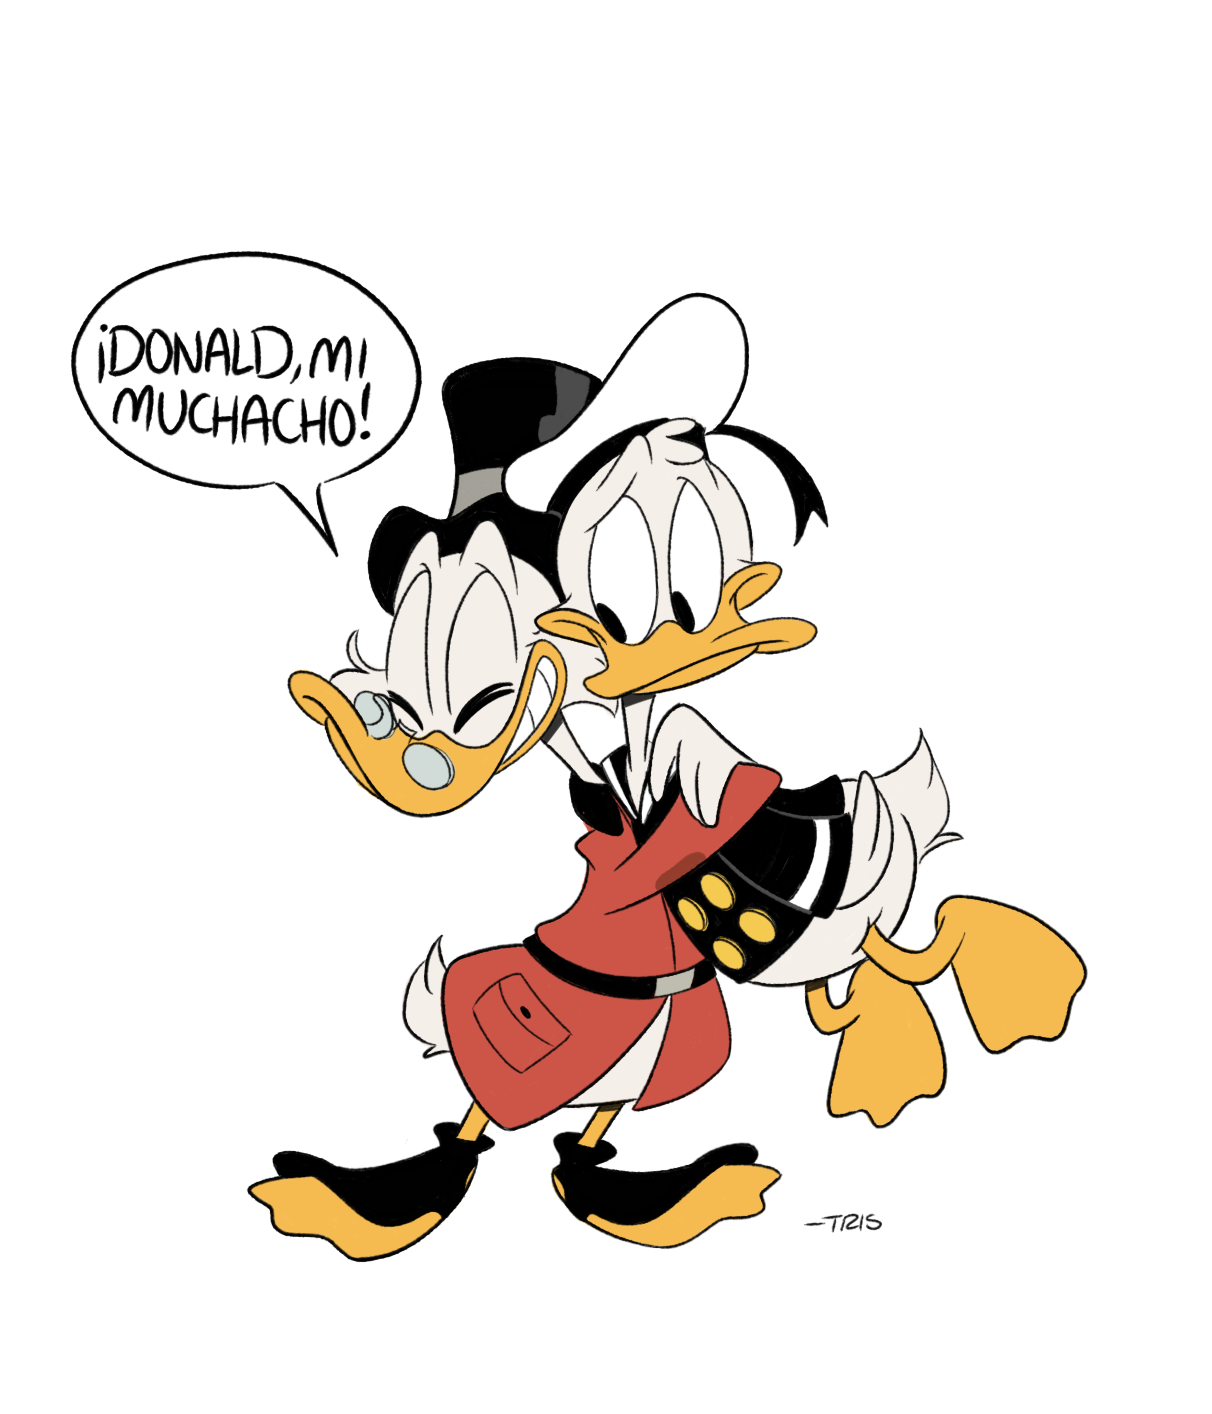 ducktales woo-oo — tricia-morvill: “Donald me lad!”.